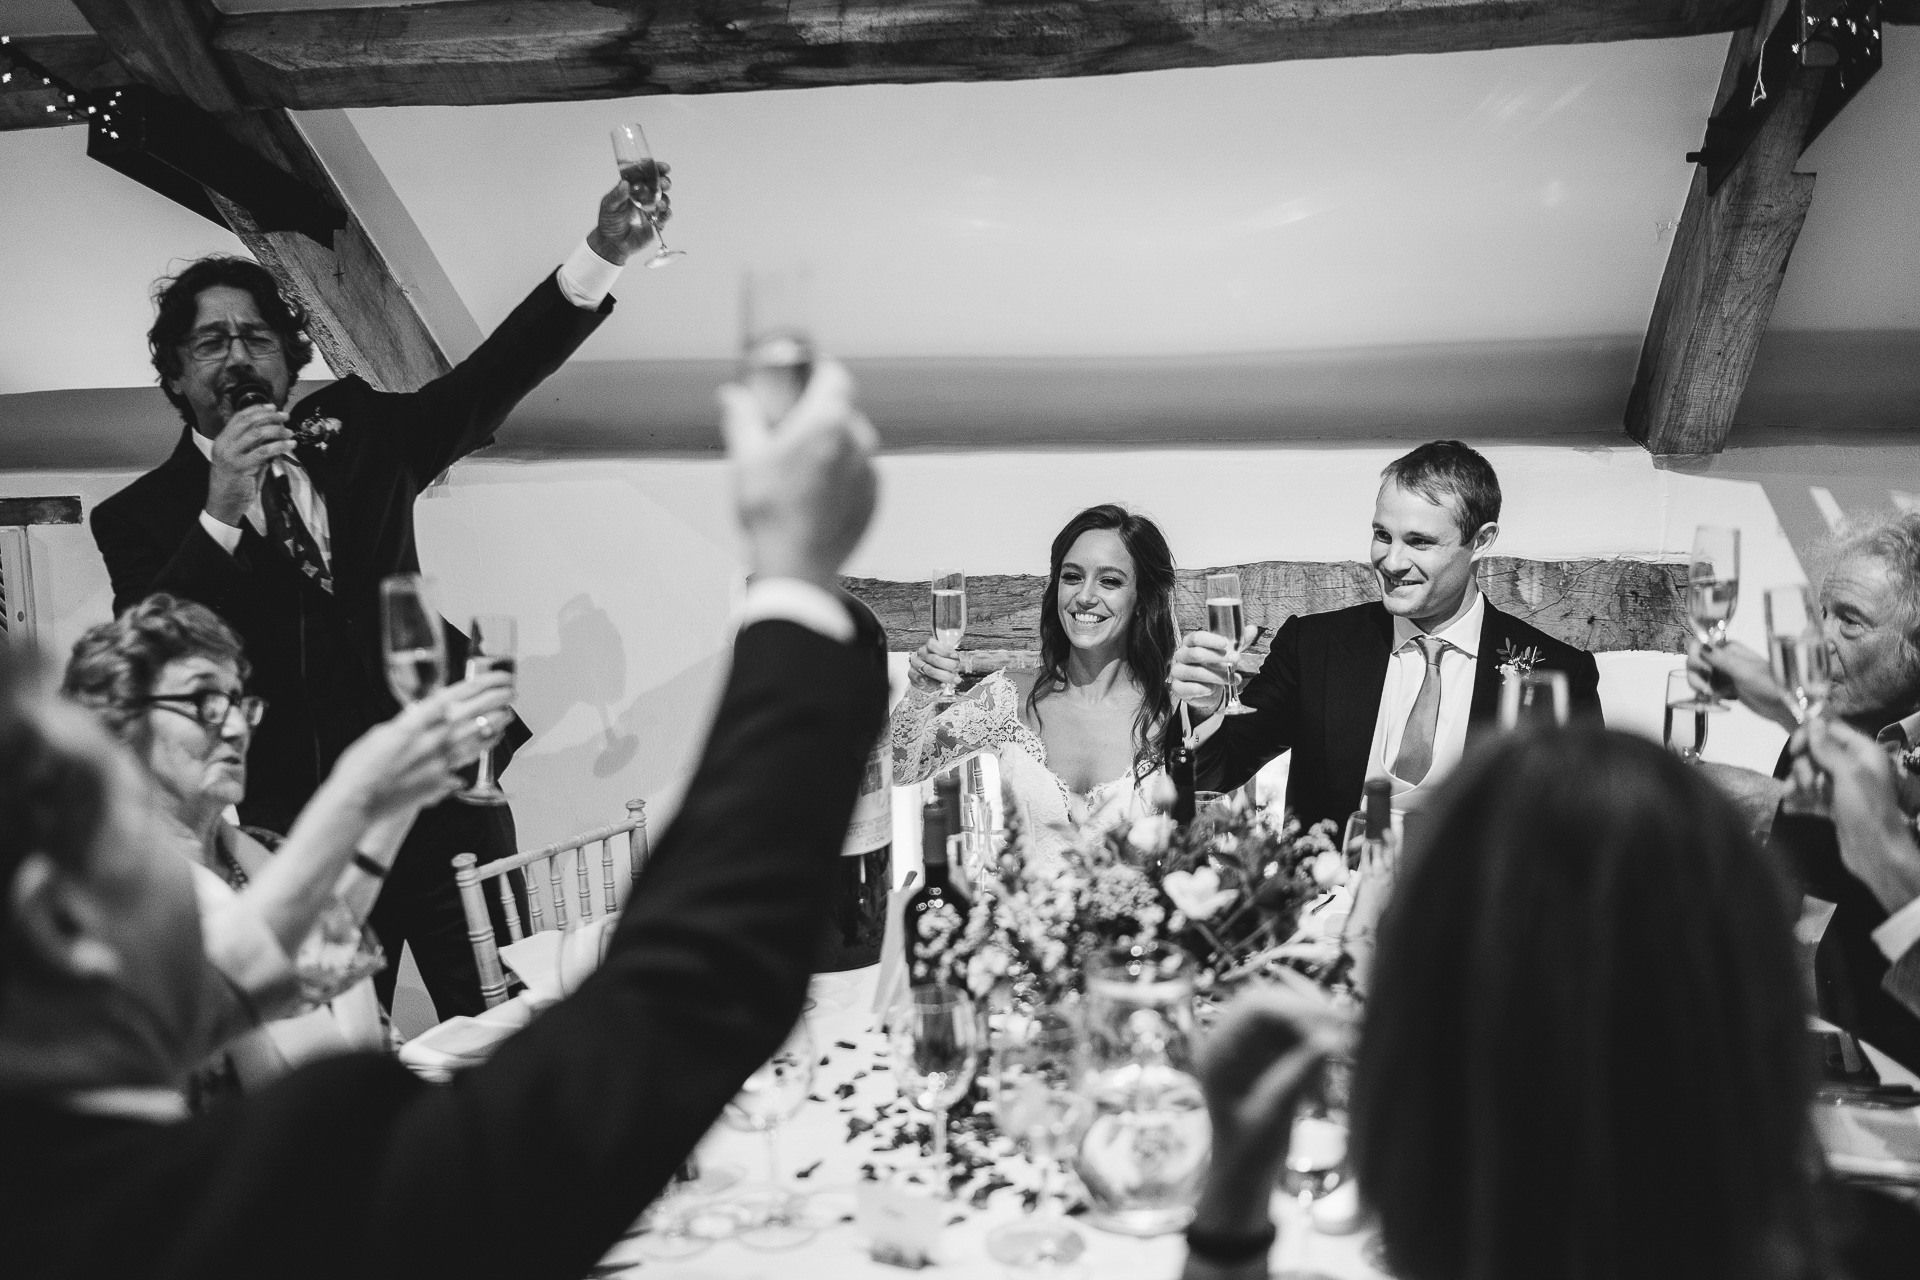 Top table raising wedding toasts